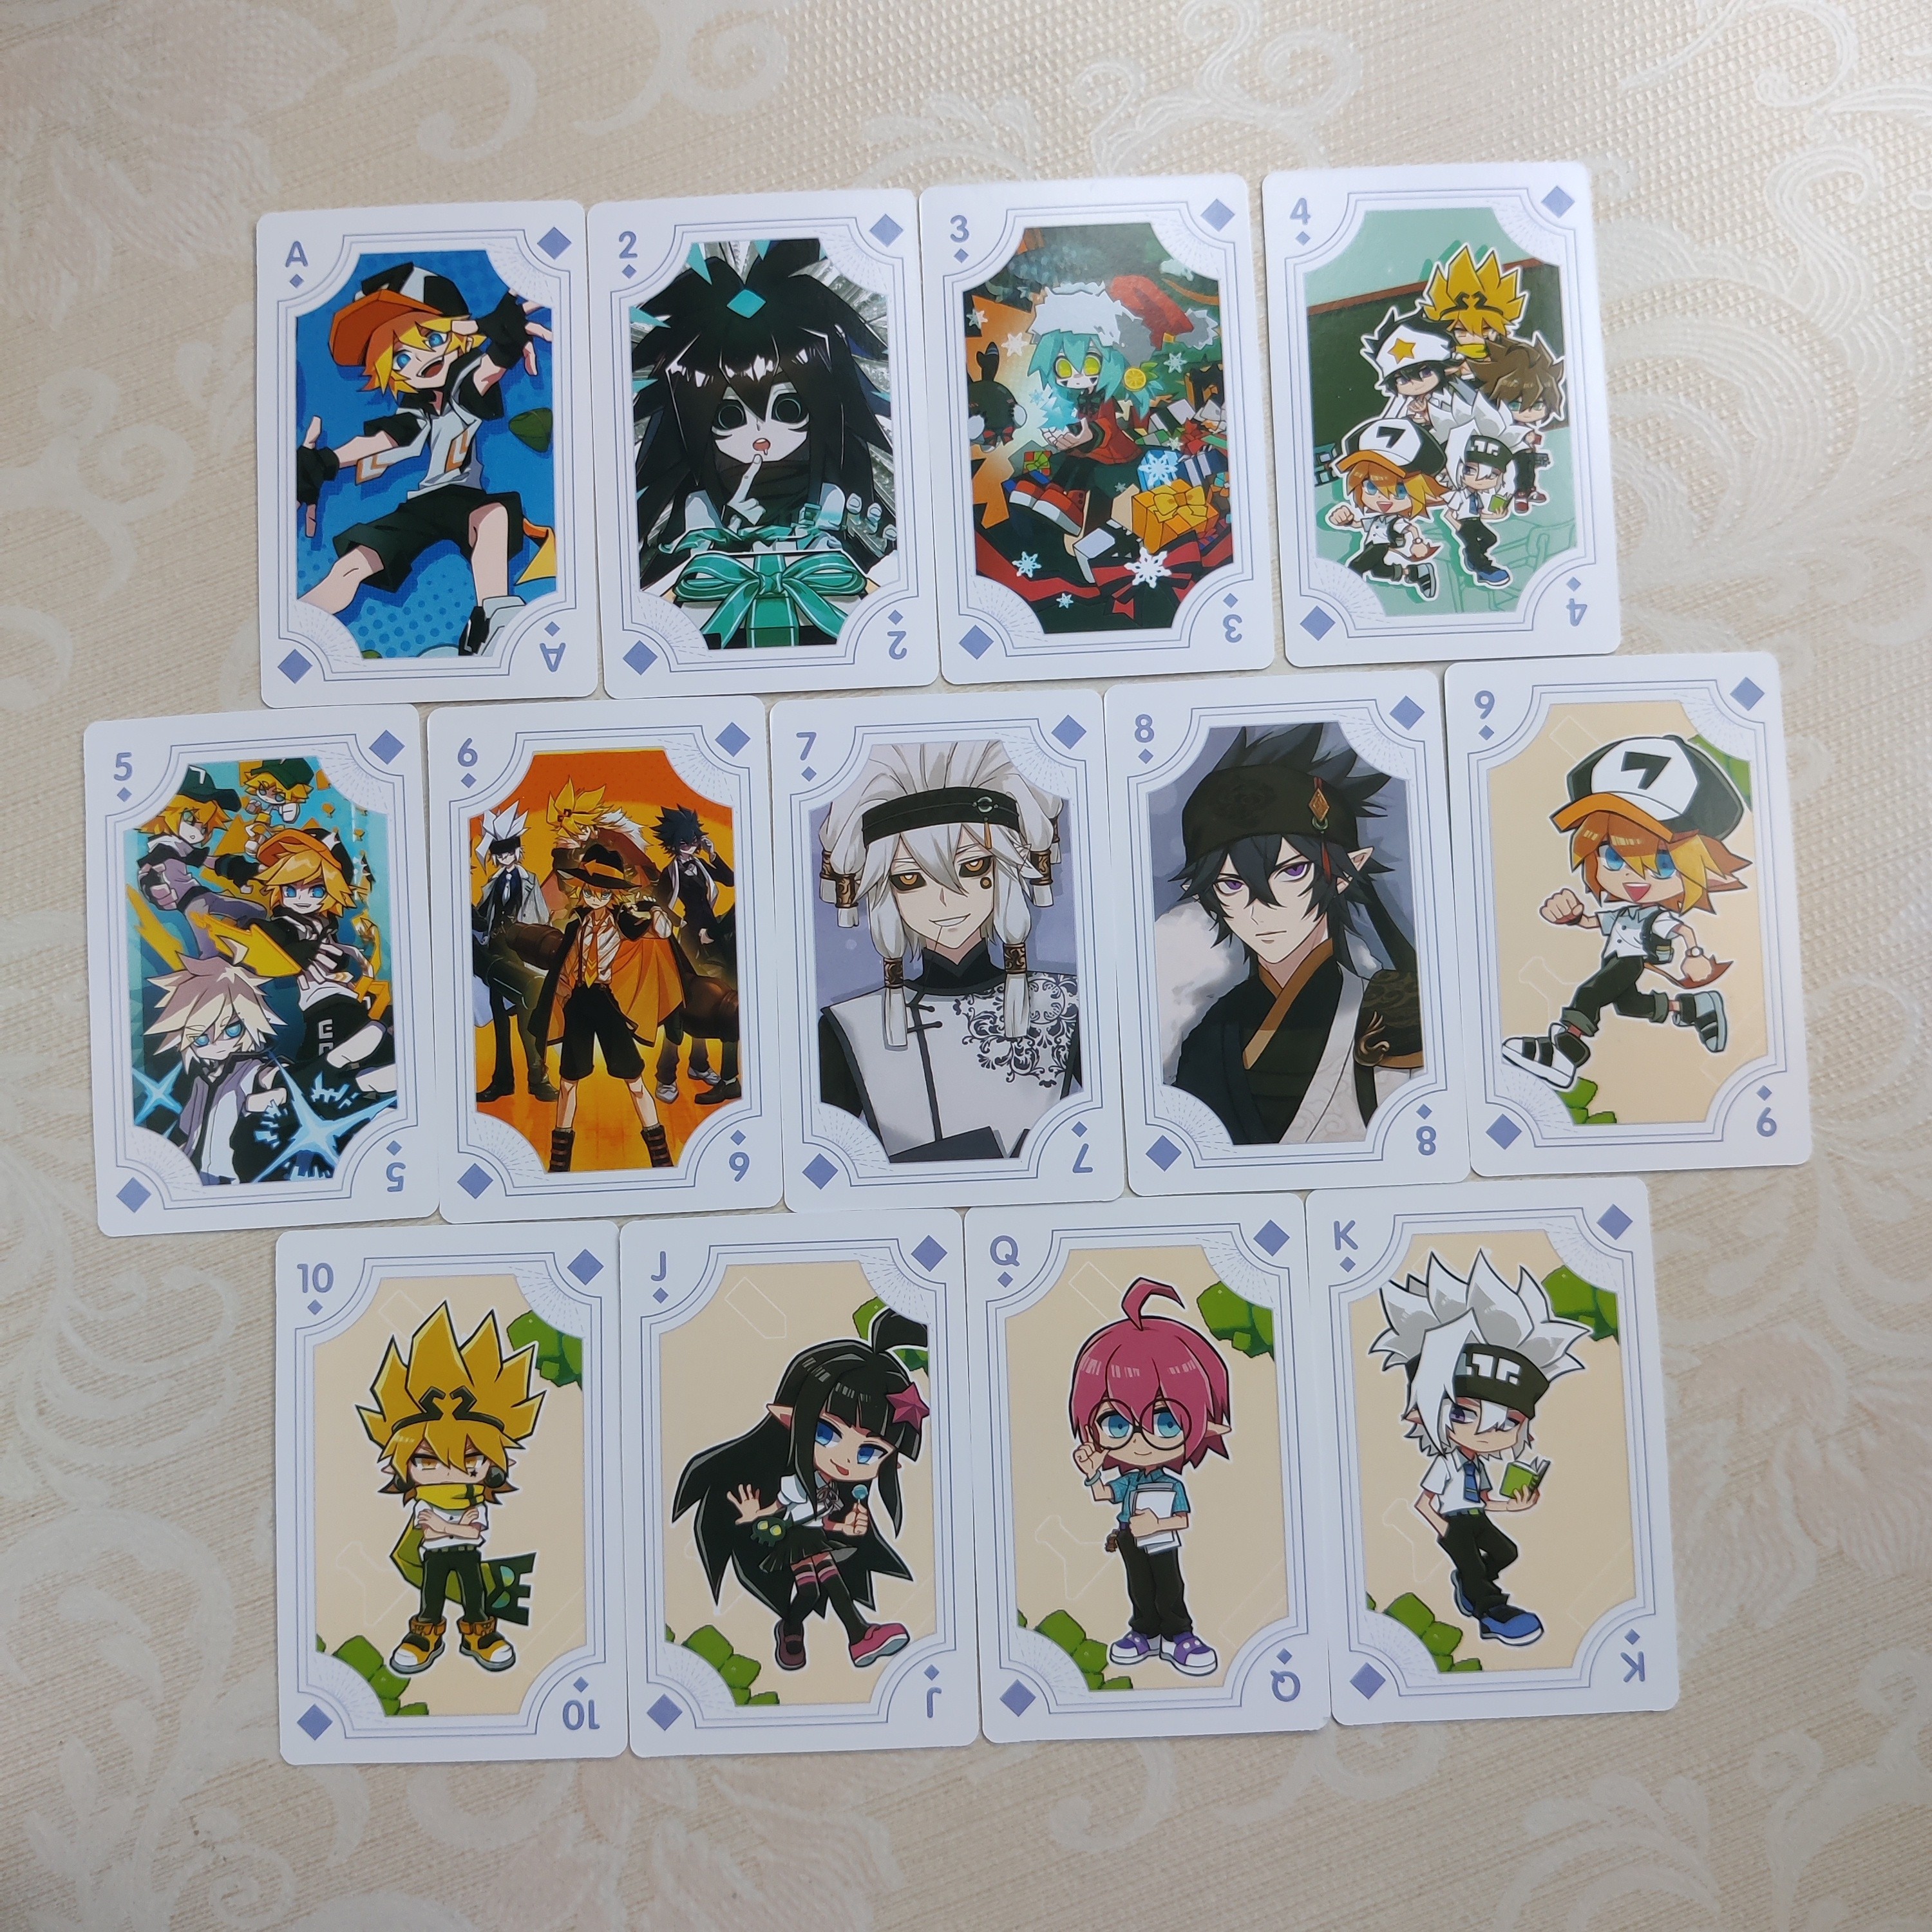 Card Battles Anime